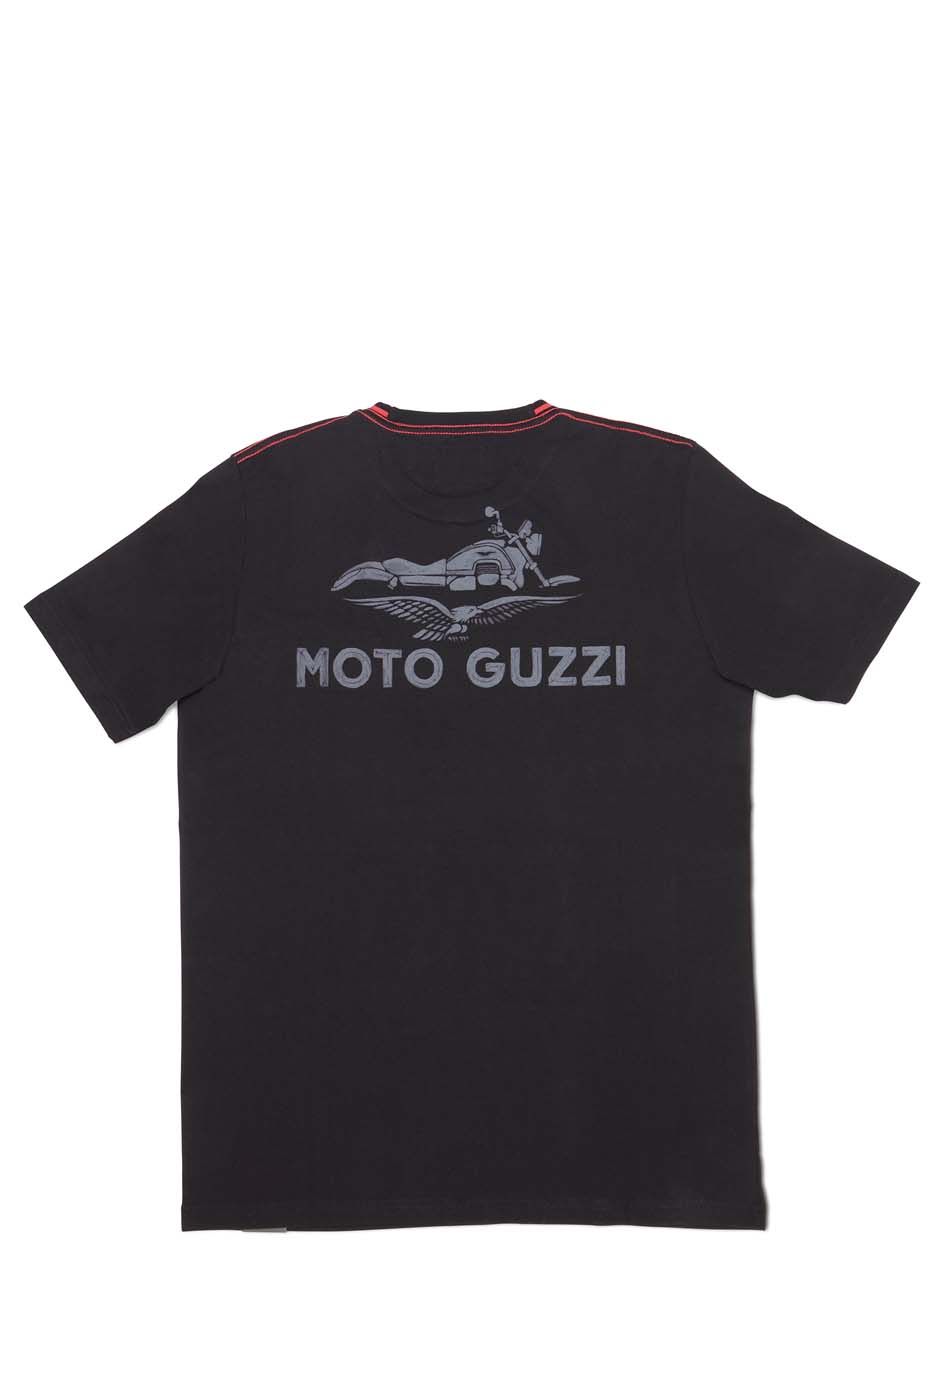 MOTO GUZZI T-SHIRT CLASSIC - BLACK